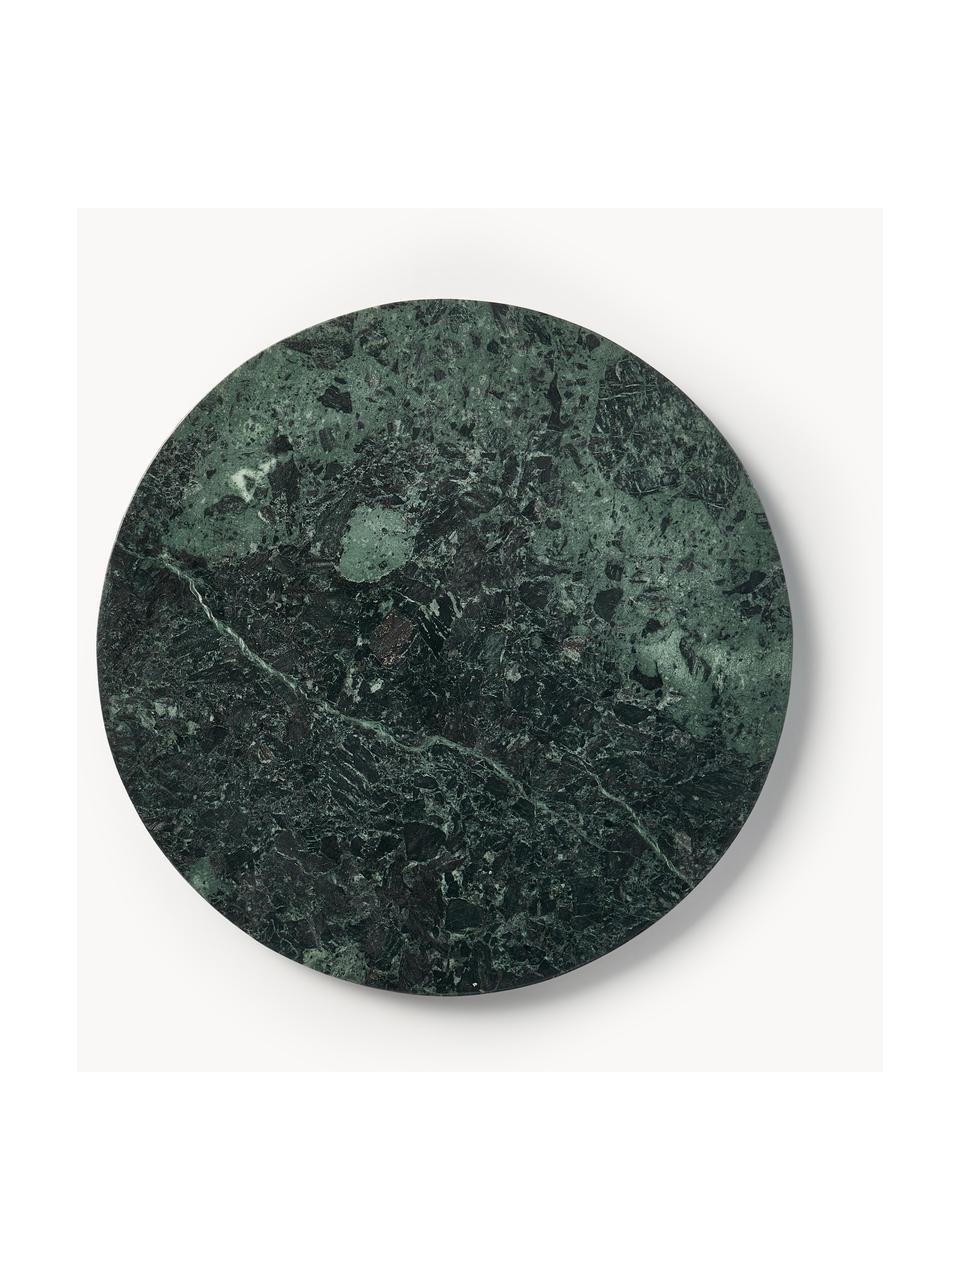 Mramorový servírovací talíř Aika, Ø 30 cm, Mramor, Zelená, mramorovaná, Ø 30 cm